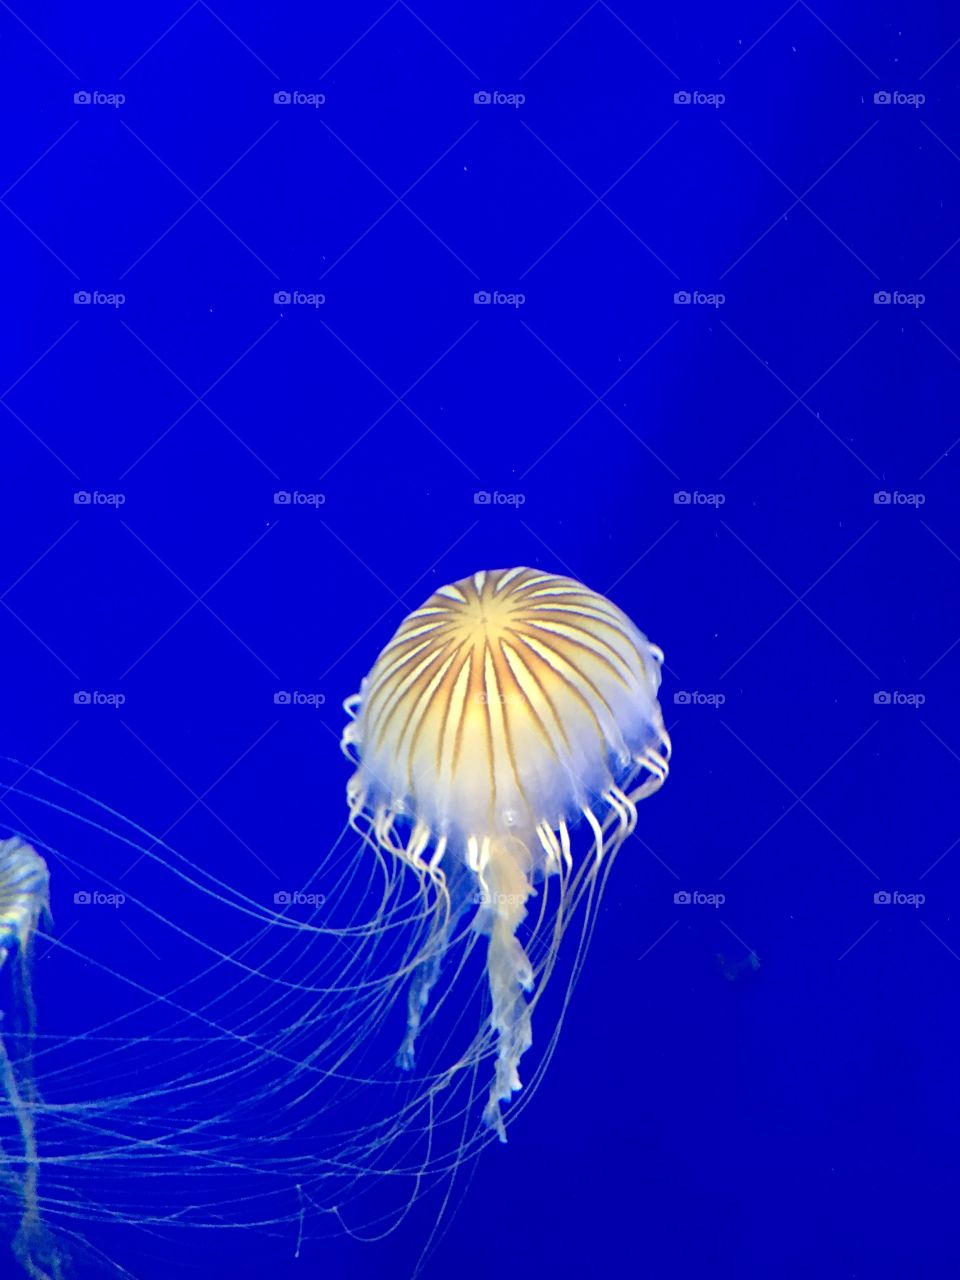 Atlanta Aquarium 2017. Beautiful jellyfish exhibit.